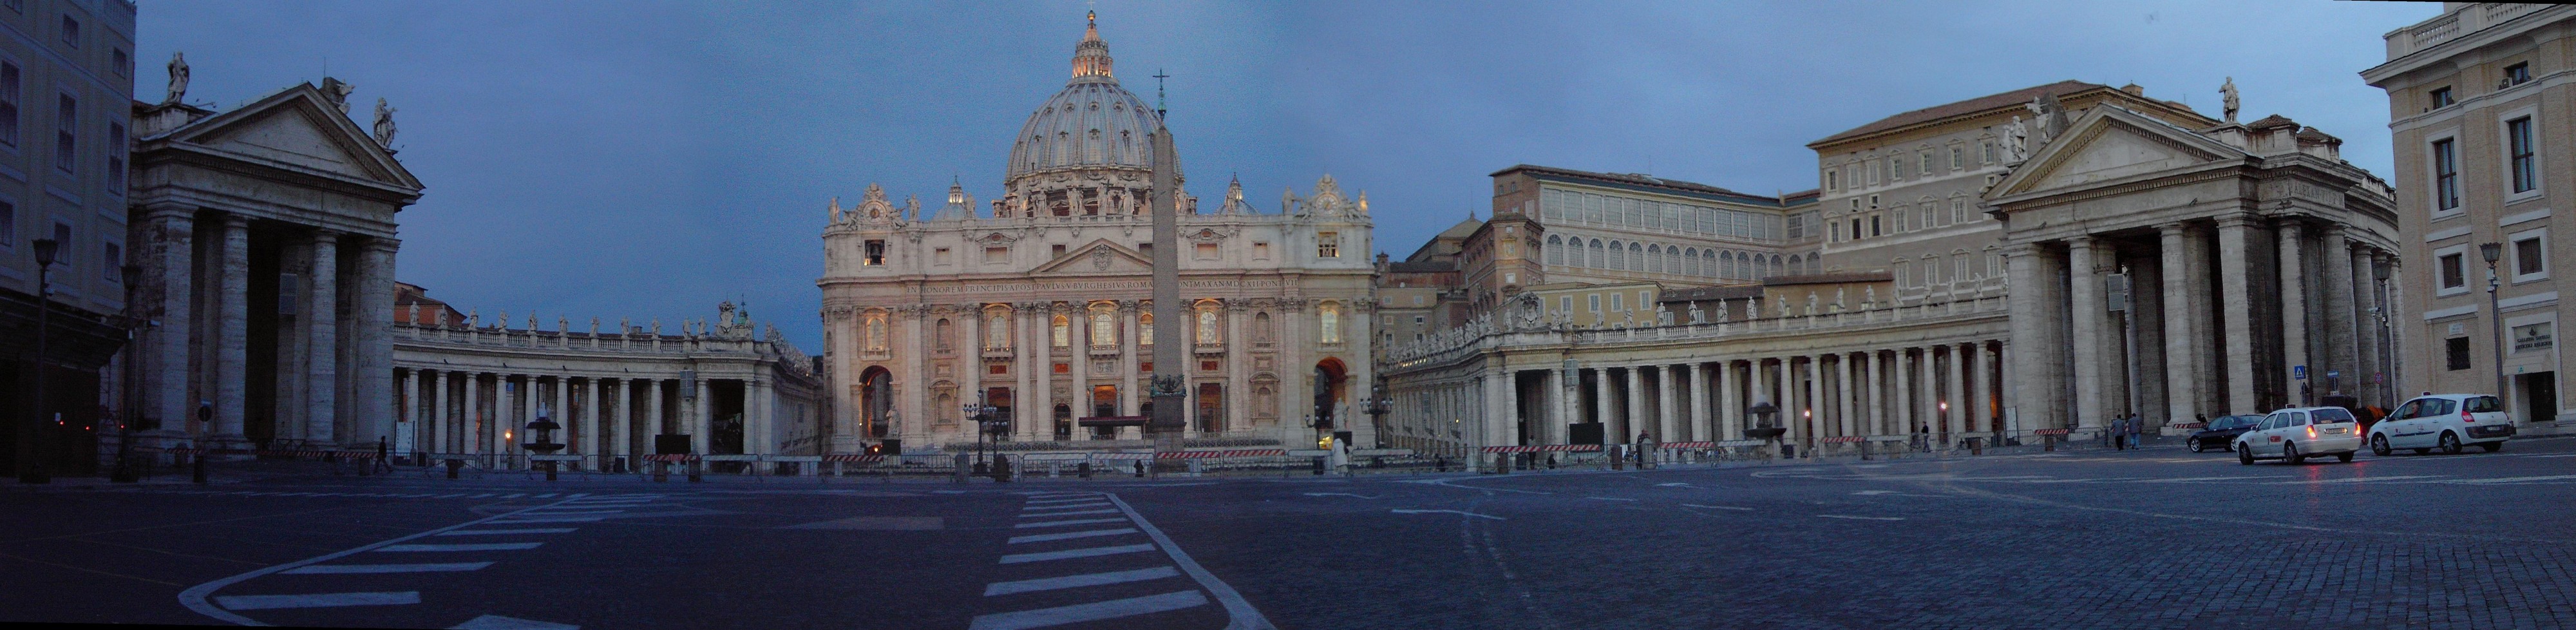 Vatikan Petersdom und Kolonaden